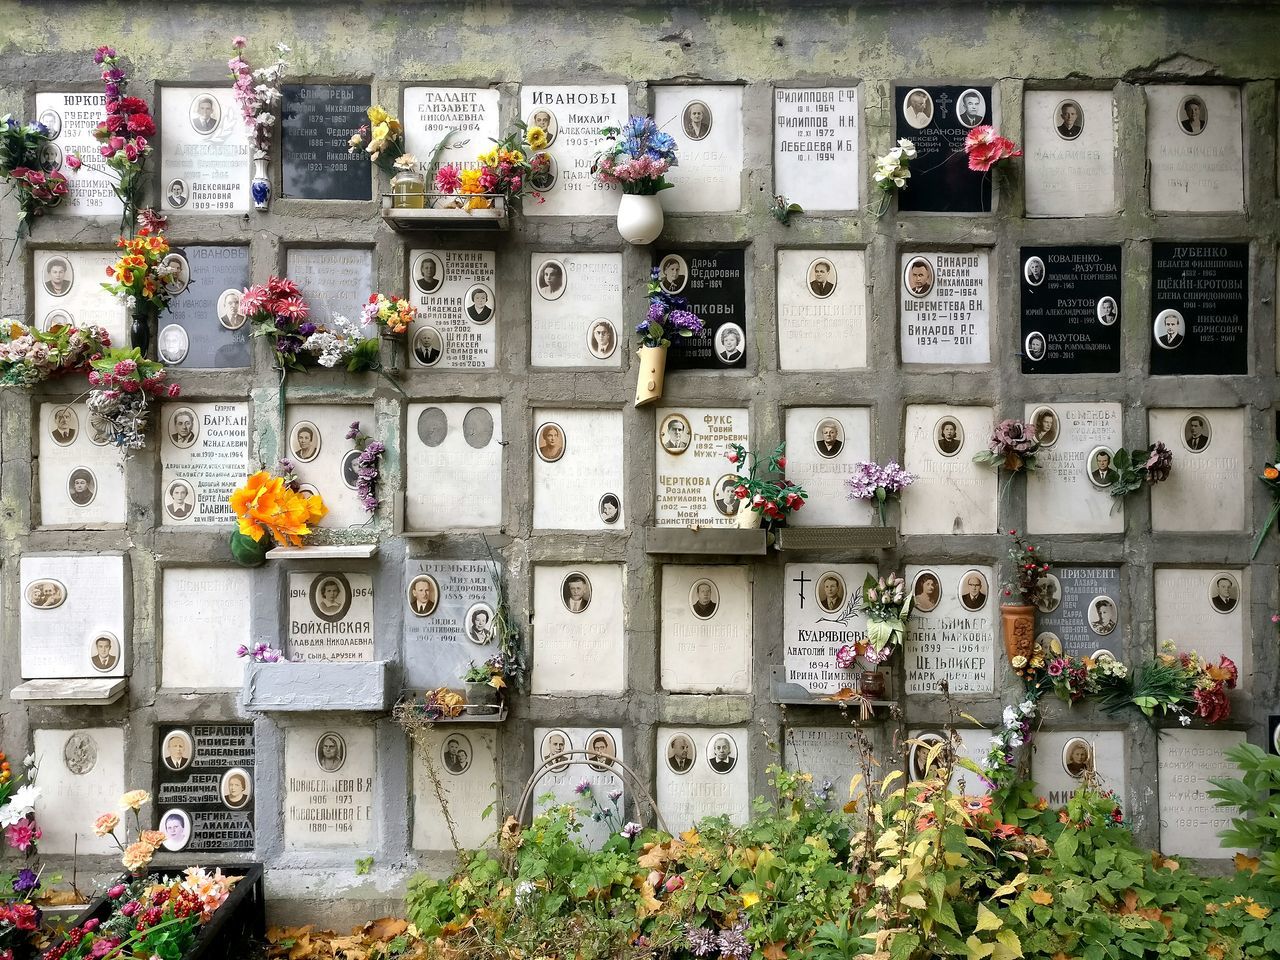 Danilovskoye cemetery